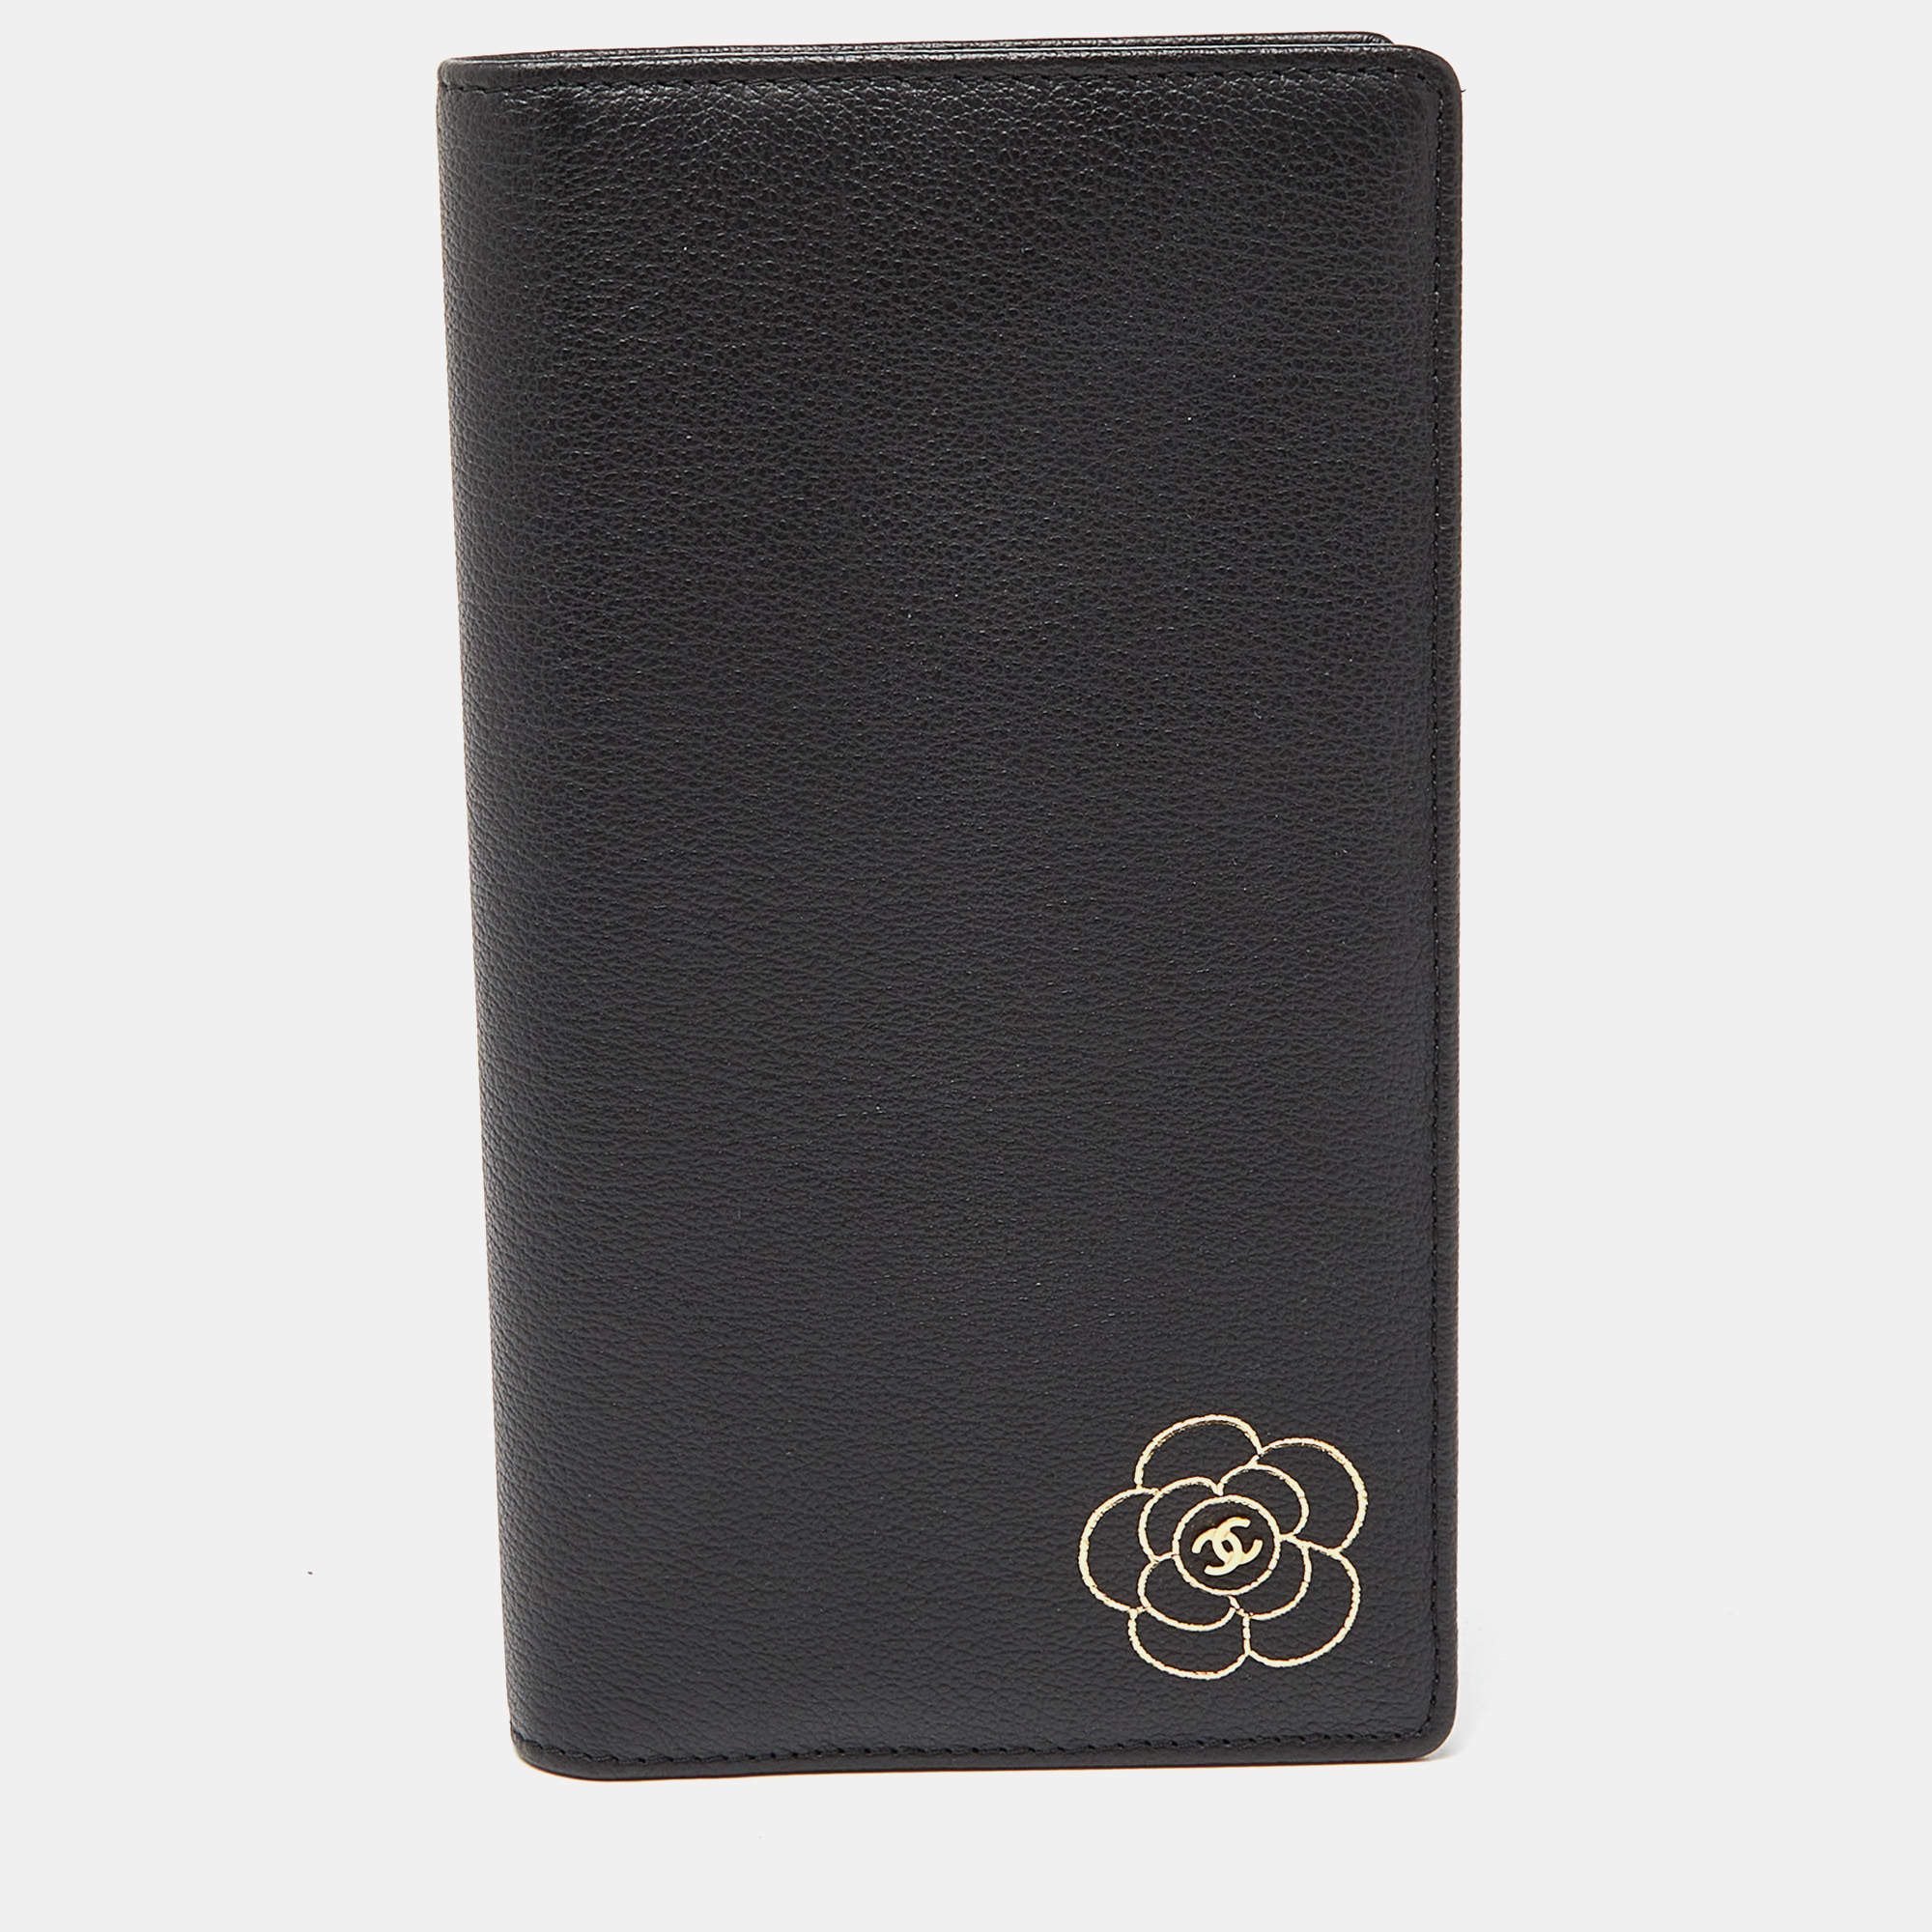 Chanel Black Leather CC Camellia Flap Long Wallet